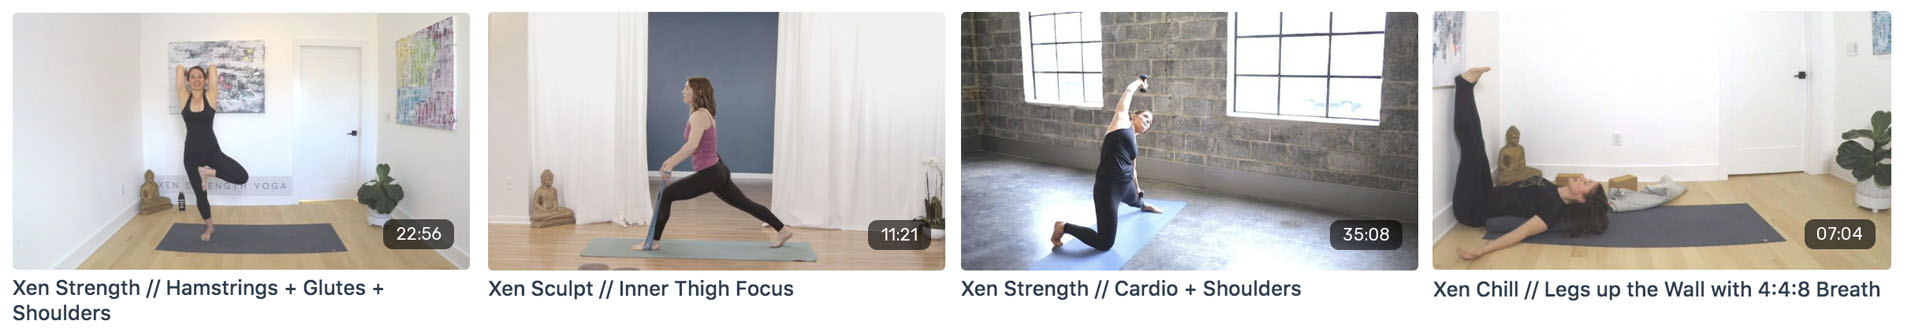 xen_strength_yoga_classes_ondemand